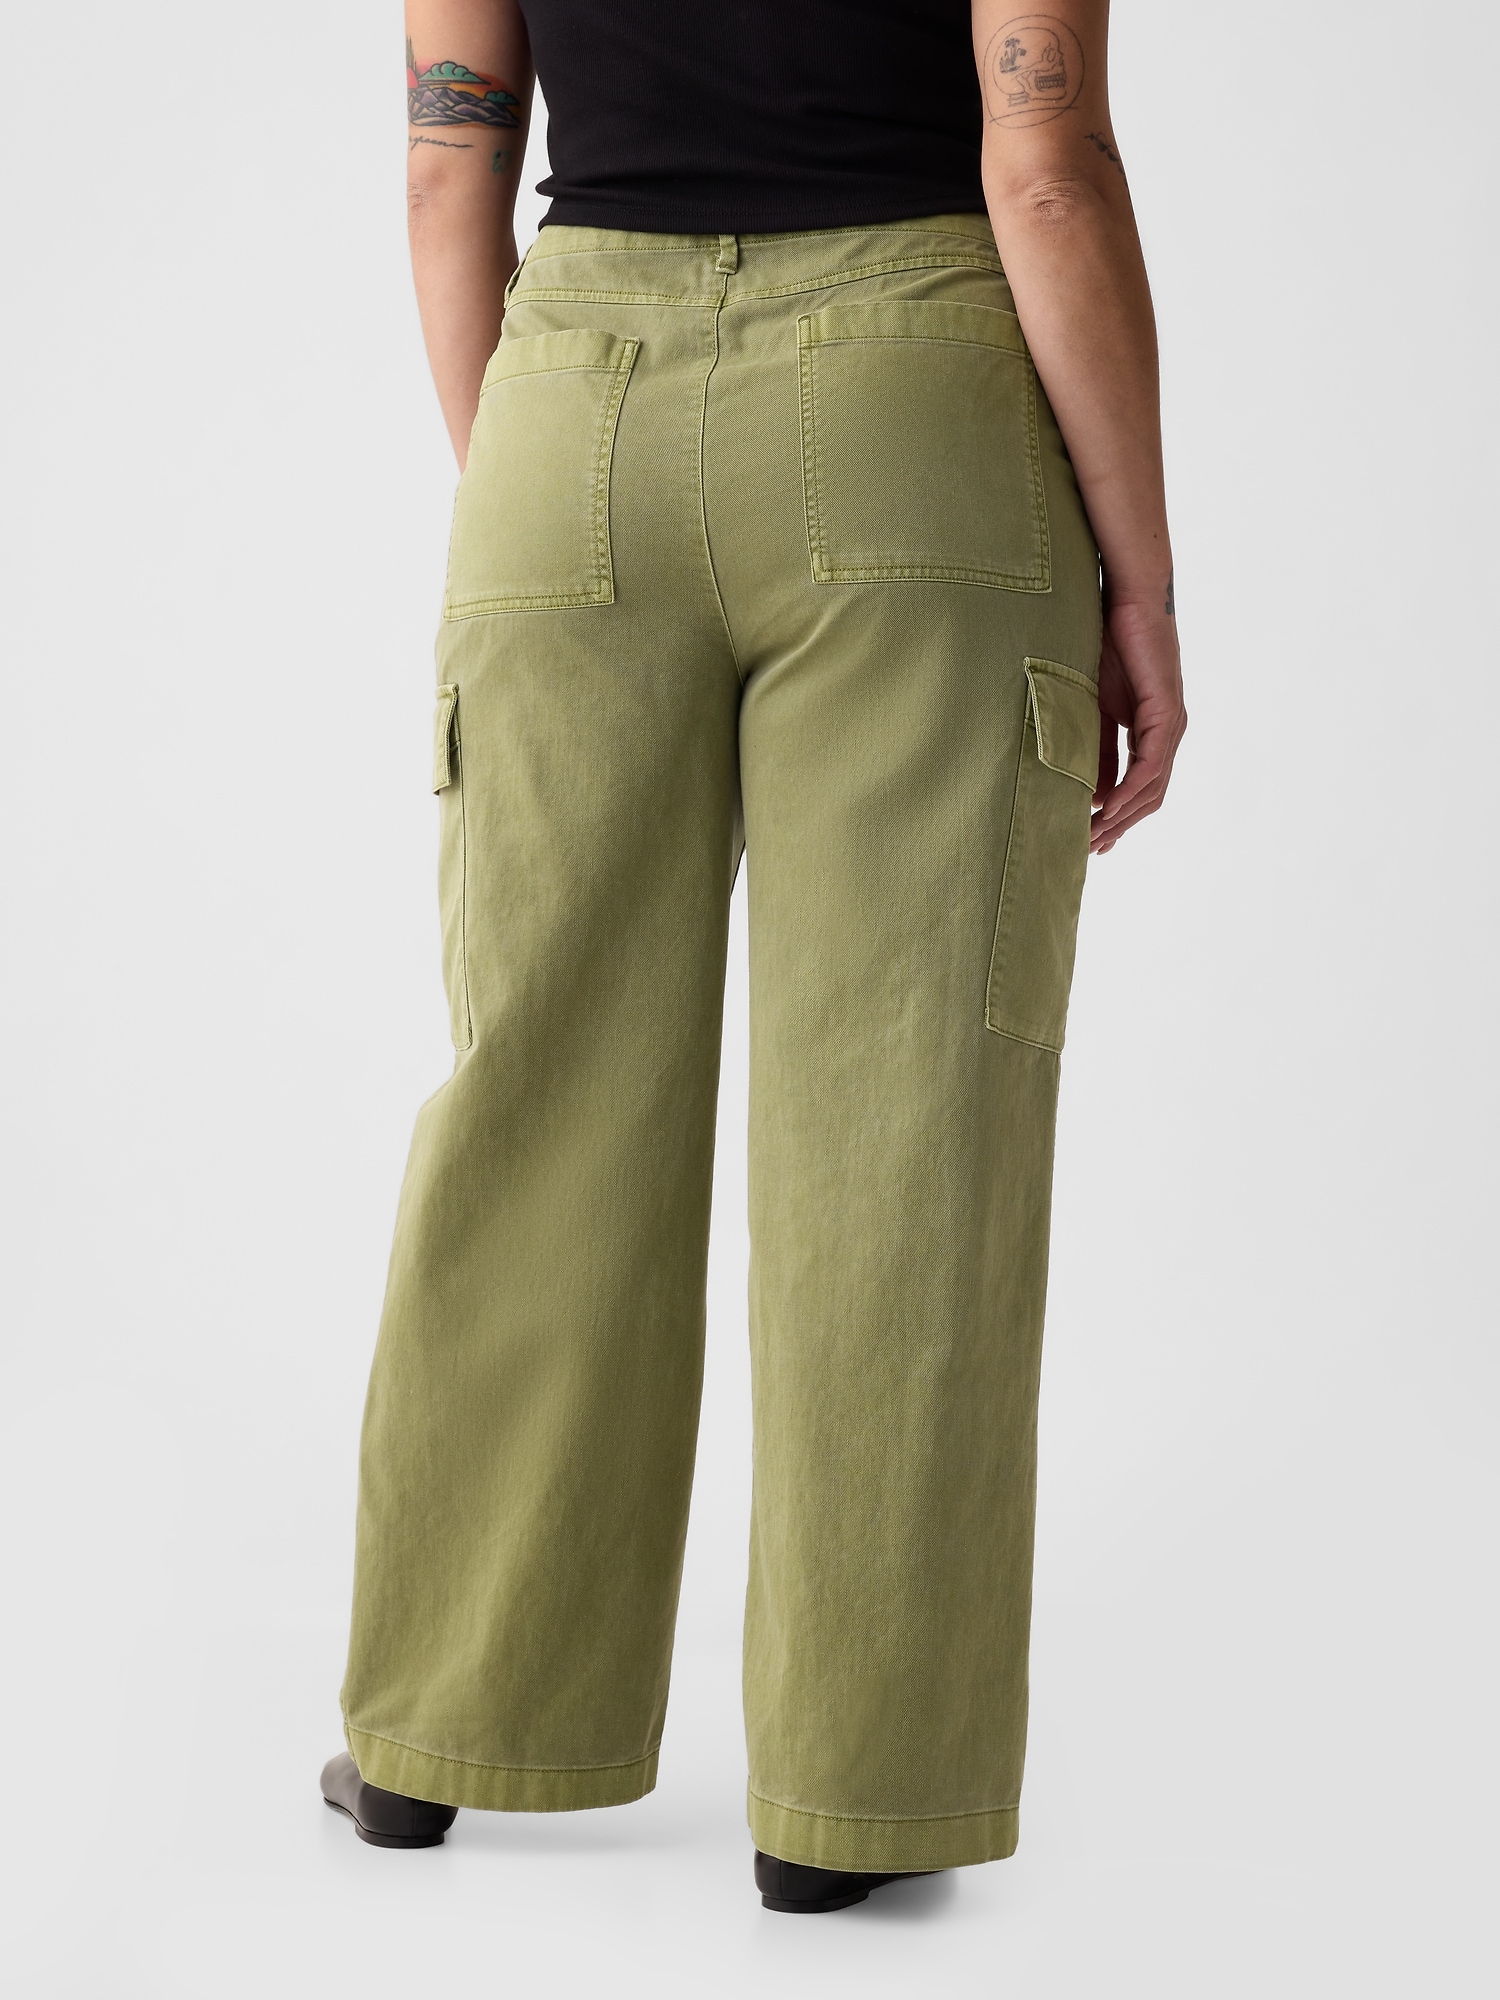 Pieces cargo pants in khaki green